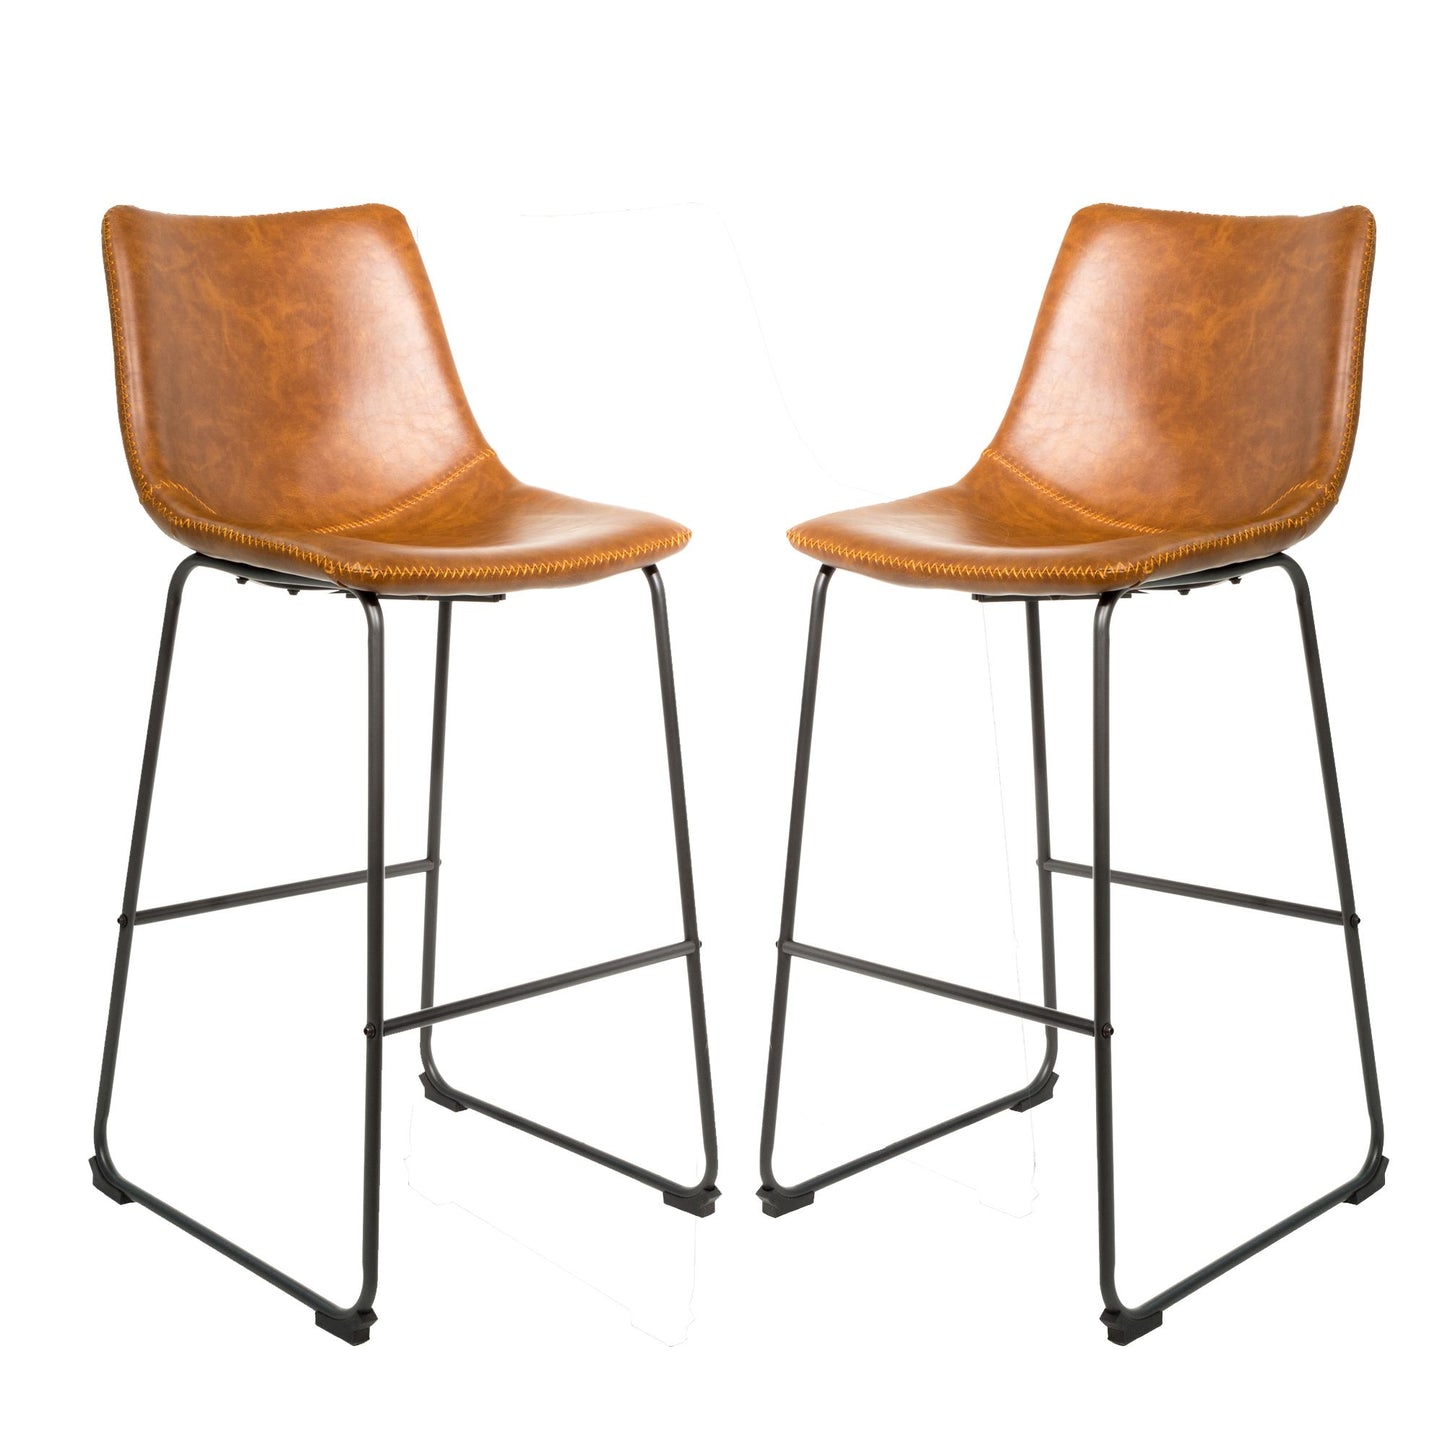 Pair of Cooper tan bar stools by Bluebone